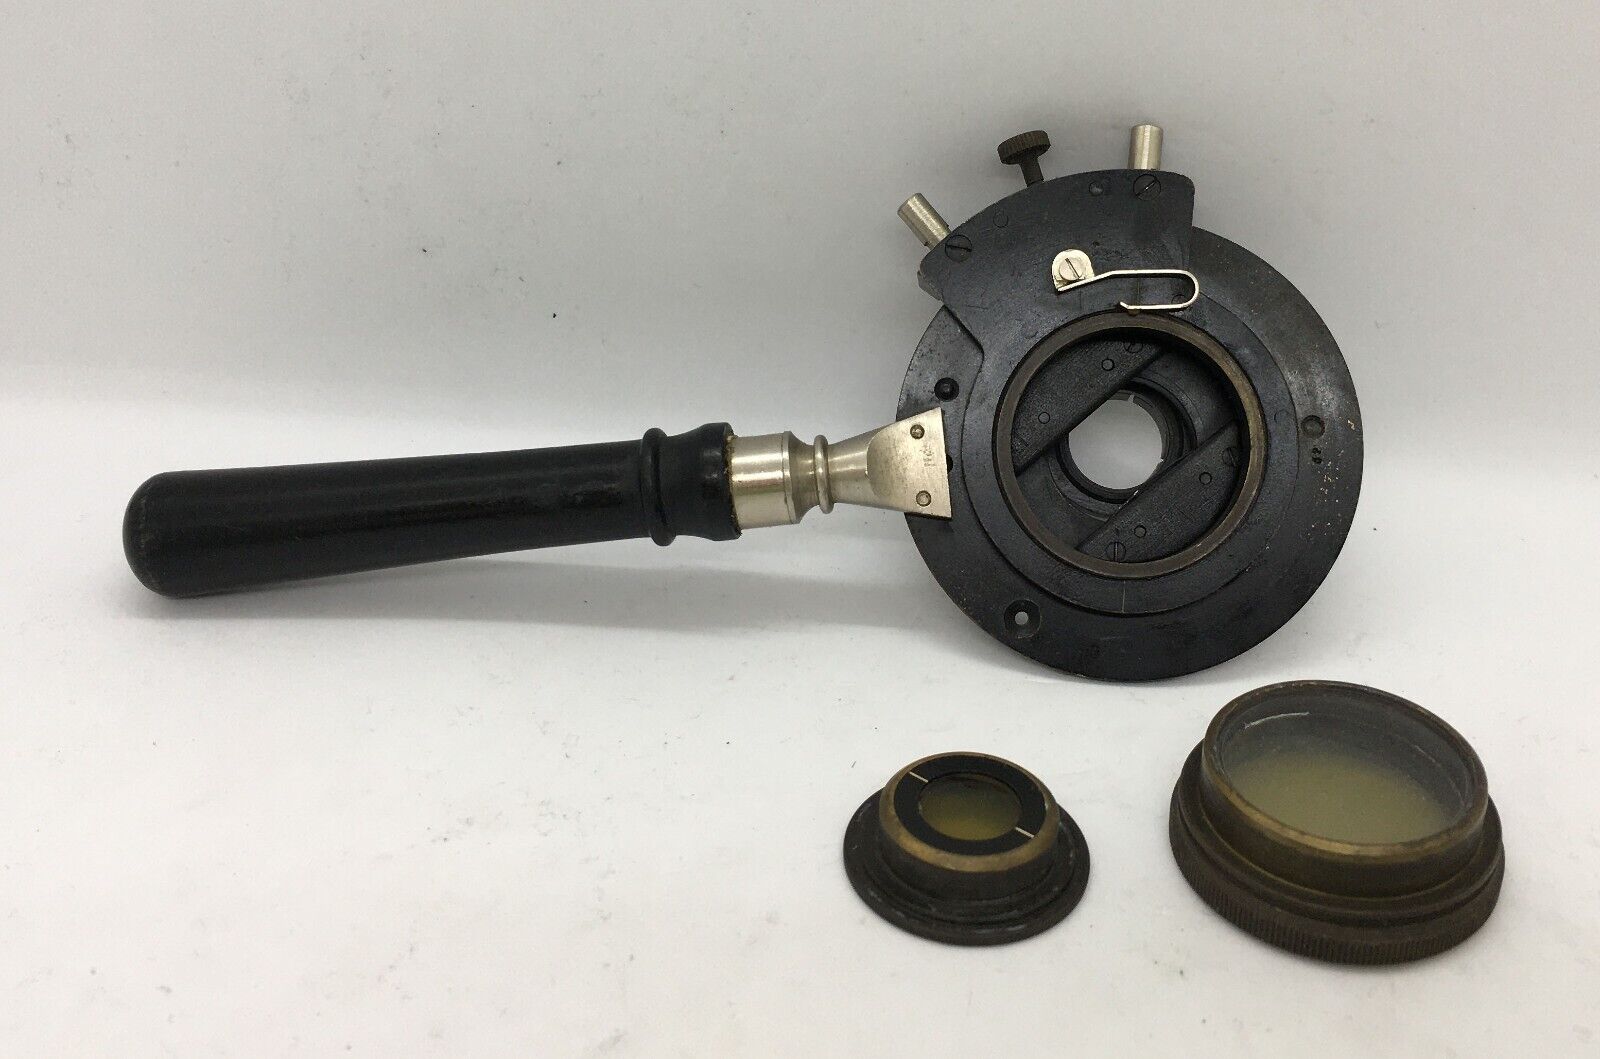 Polarizing condenser to vintage brass microscope